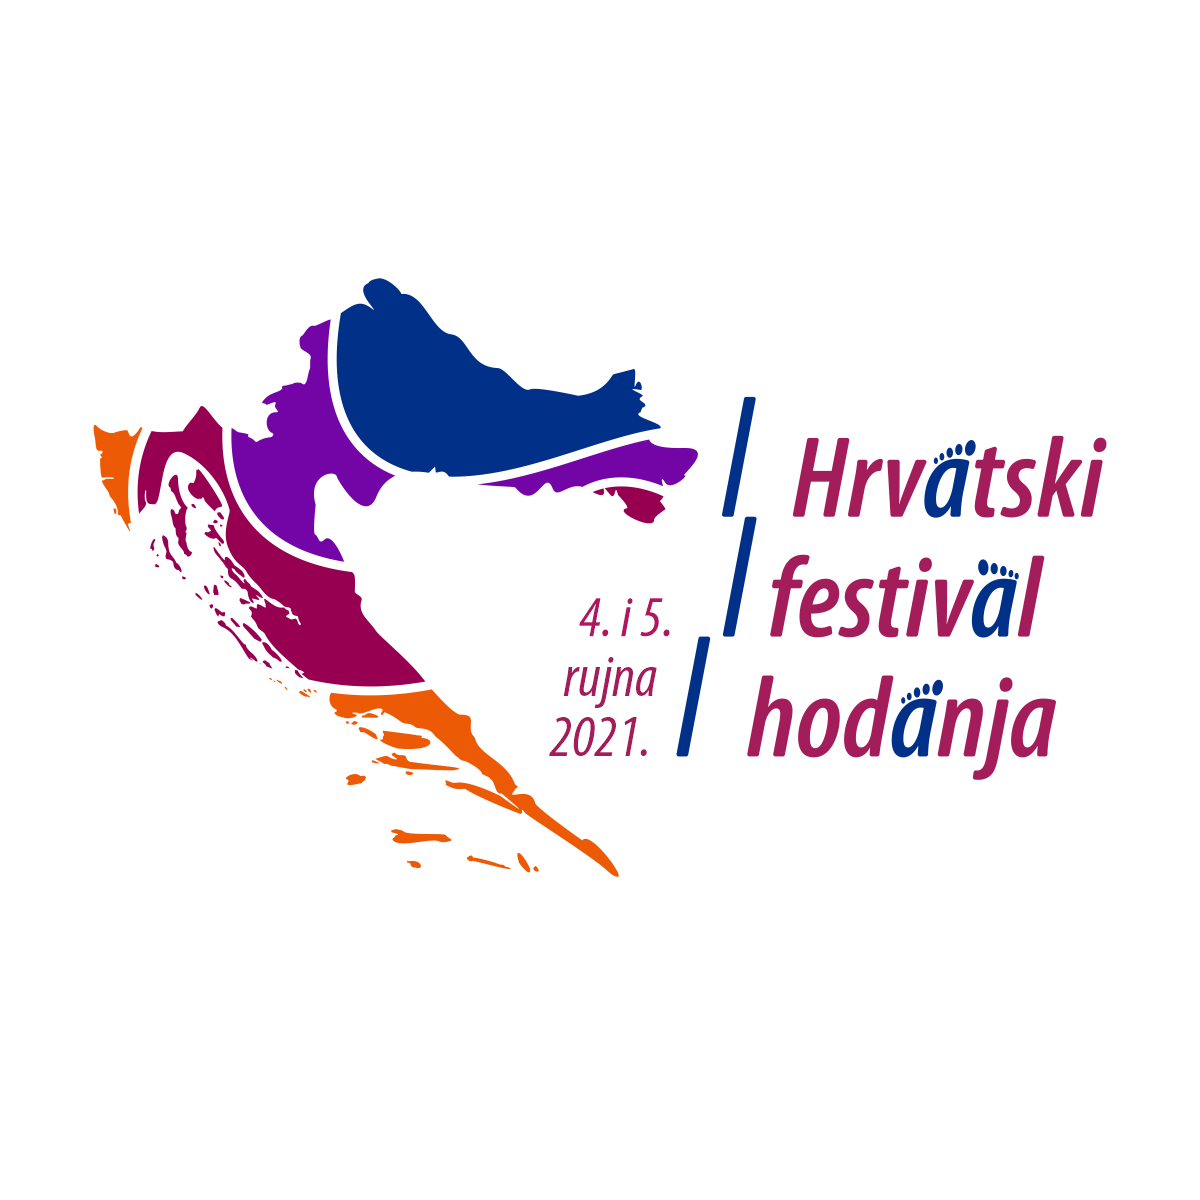 Hrvatski festival hodanja